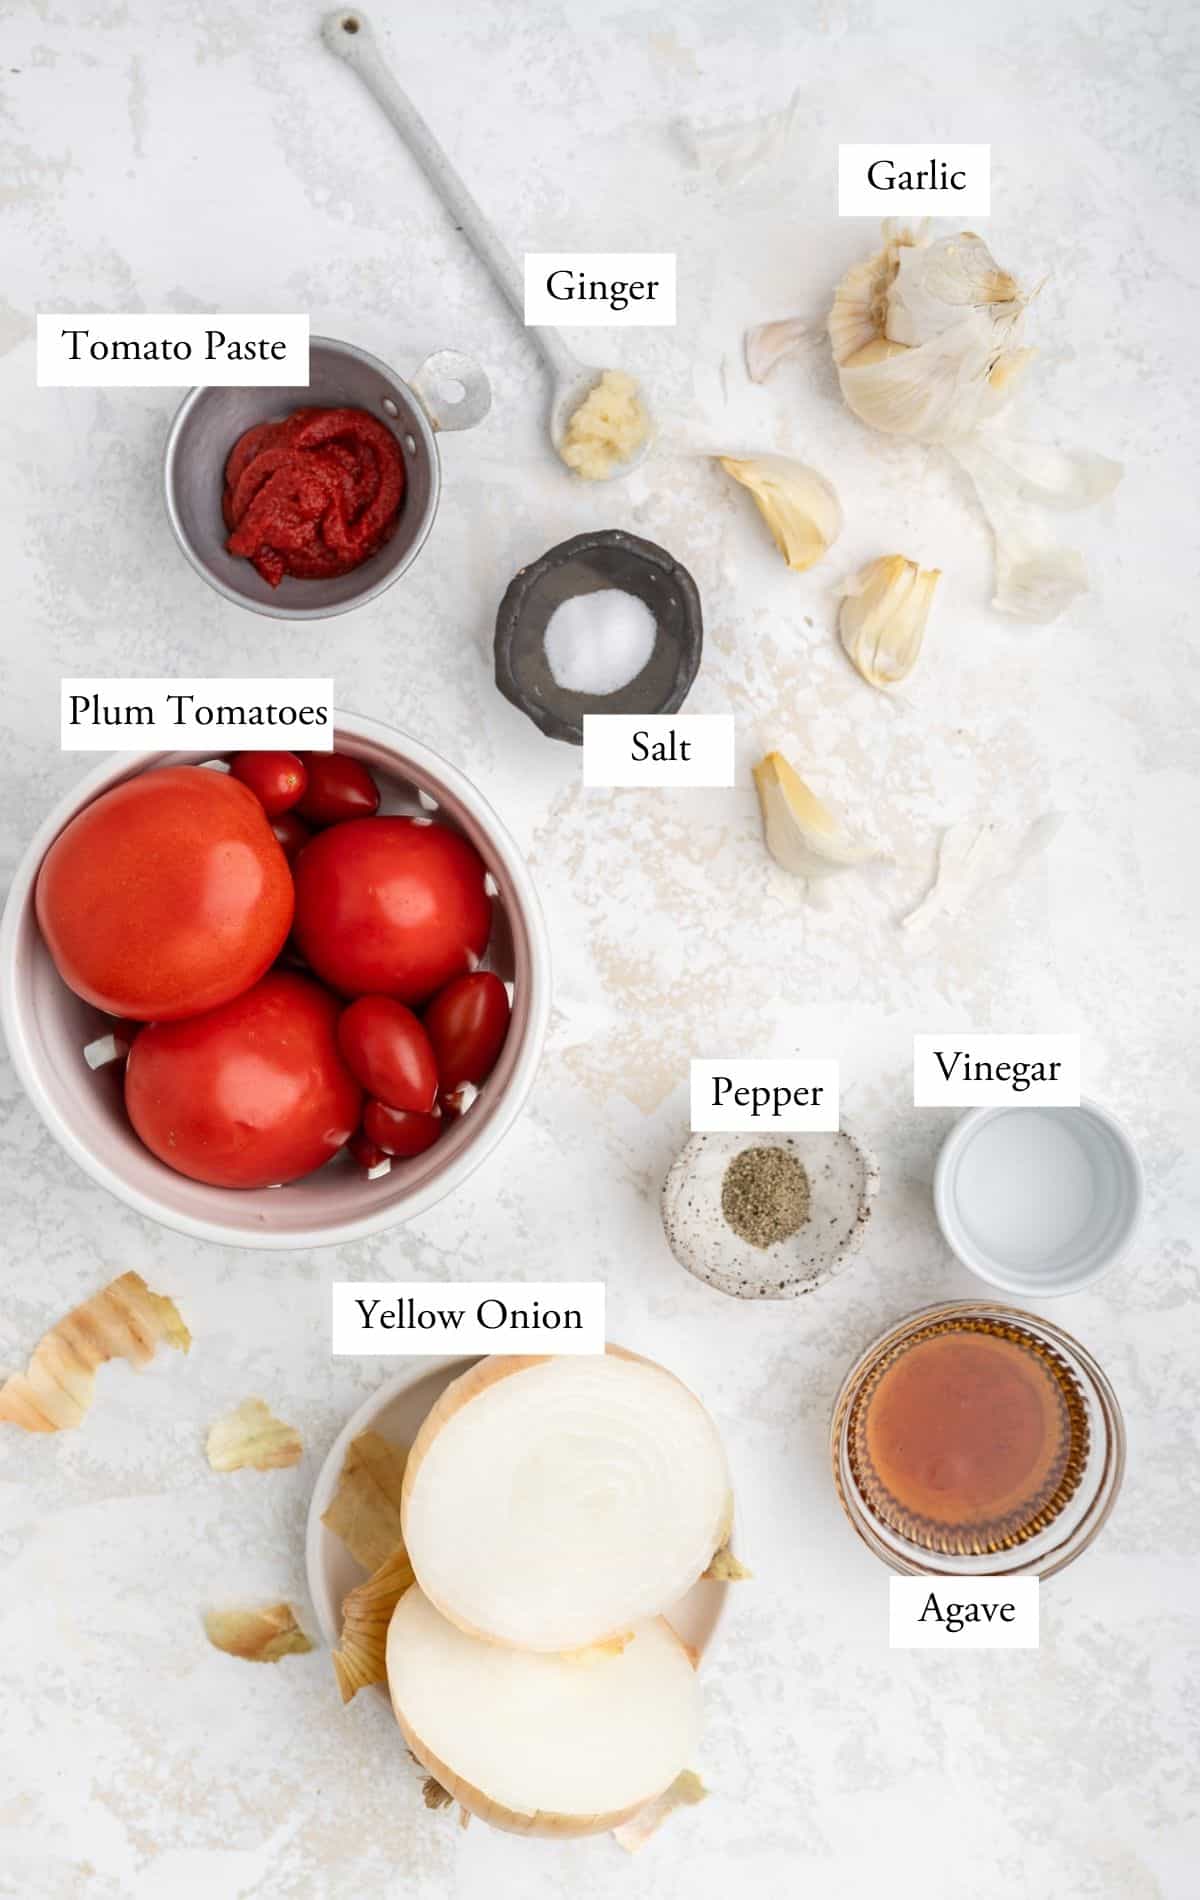 ingredients for homemade ketchup: tomatoes, tomato paste, onion, agave, pepper, vinegar, salt, ginger, garlic